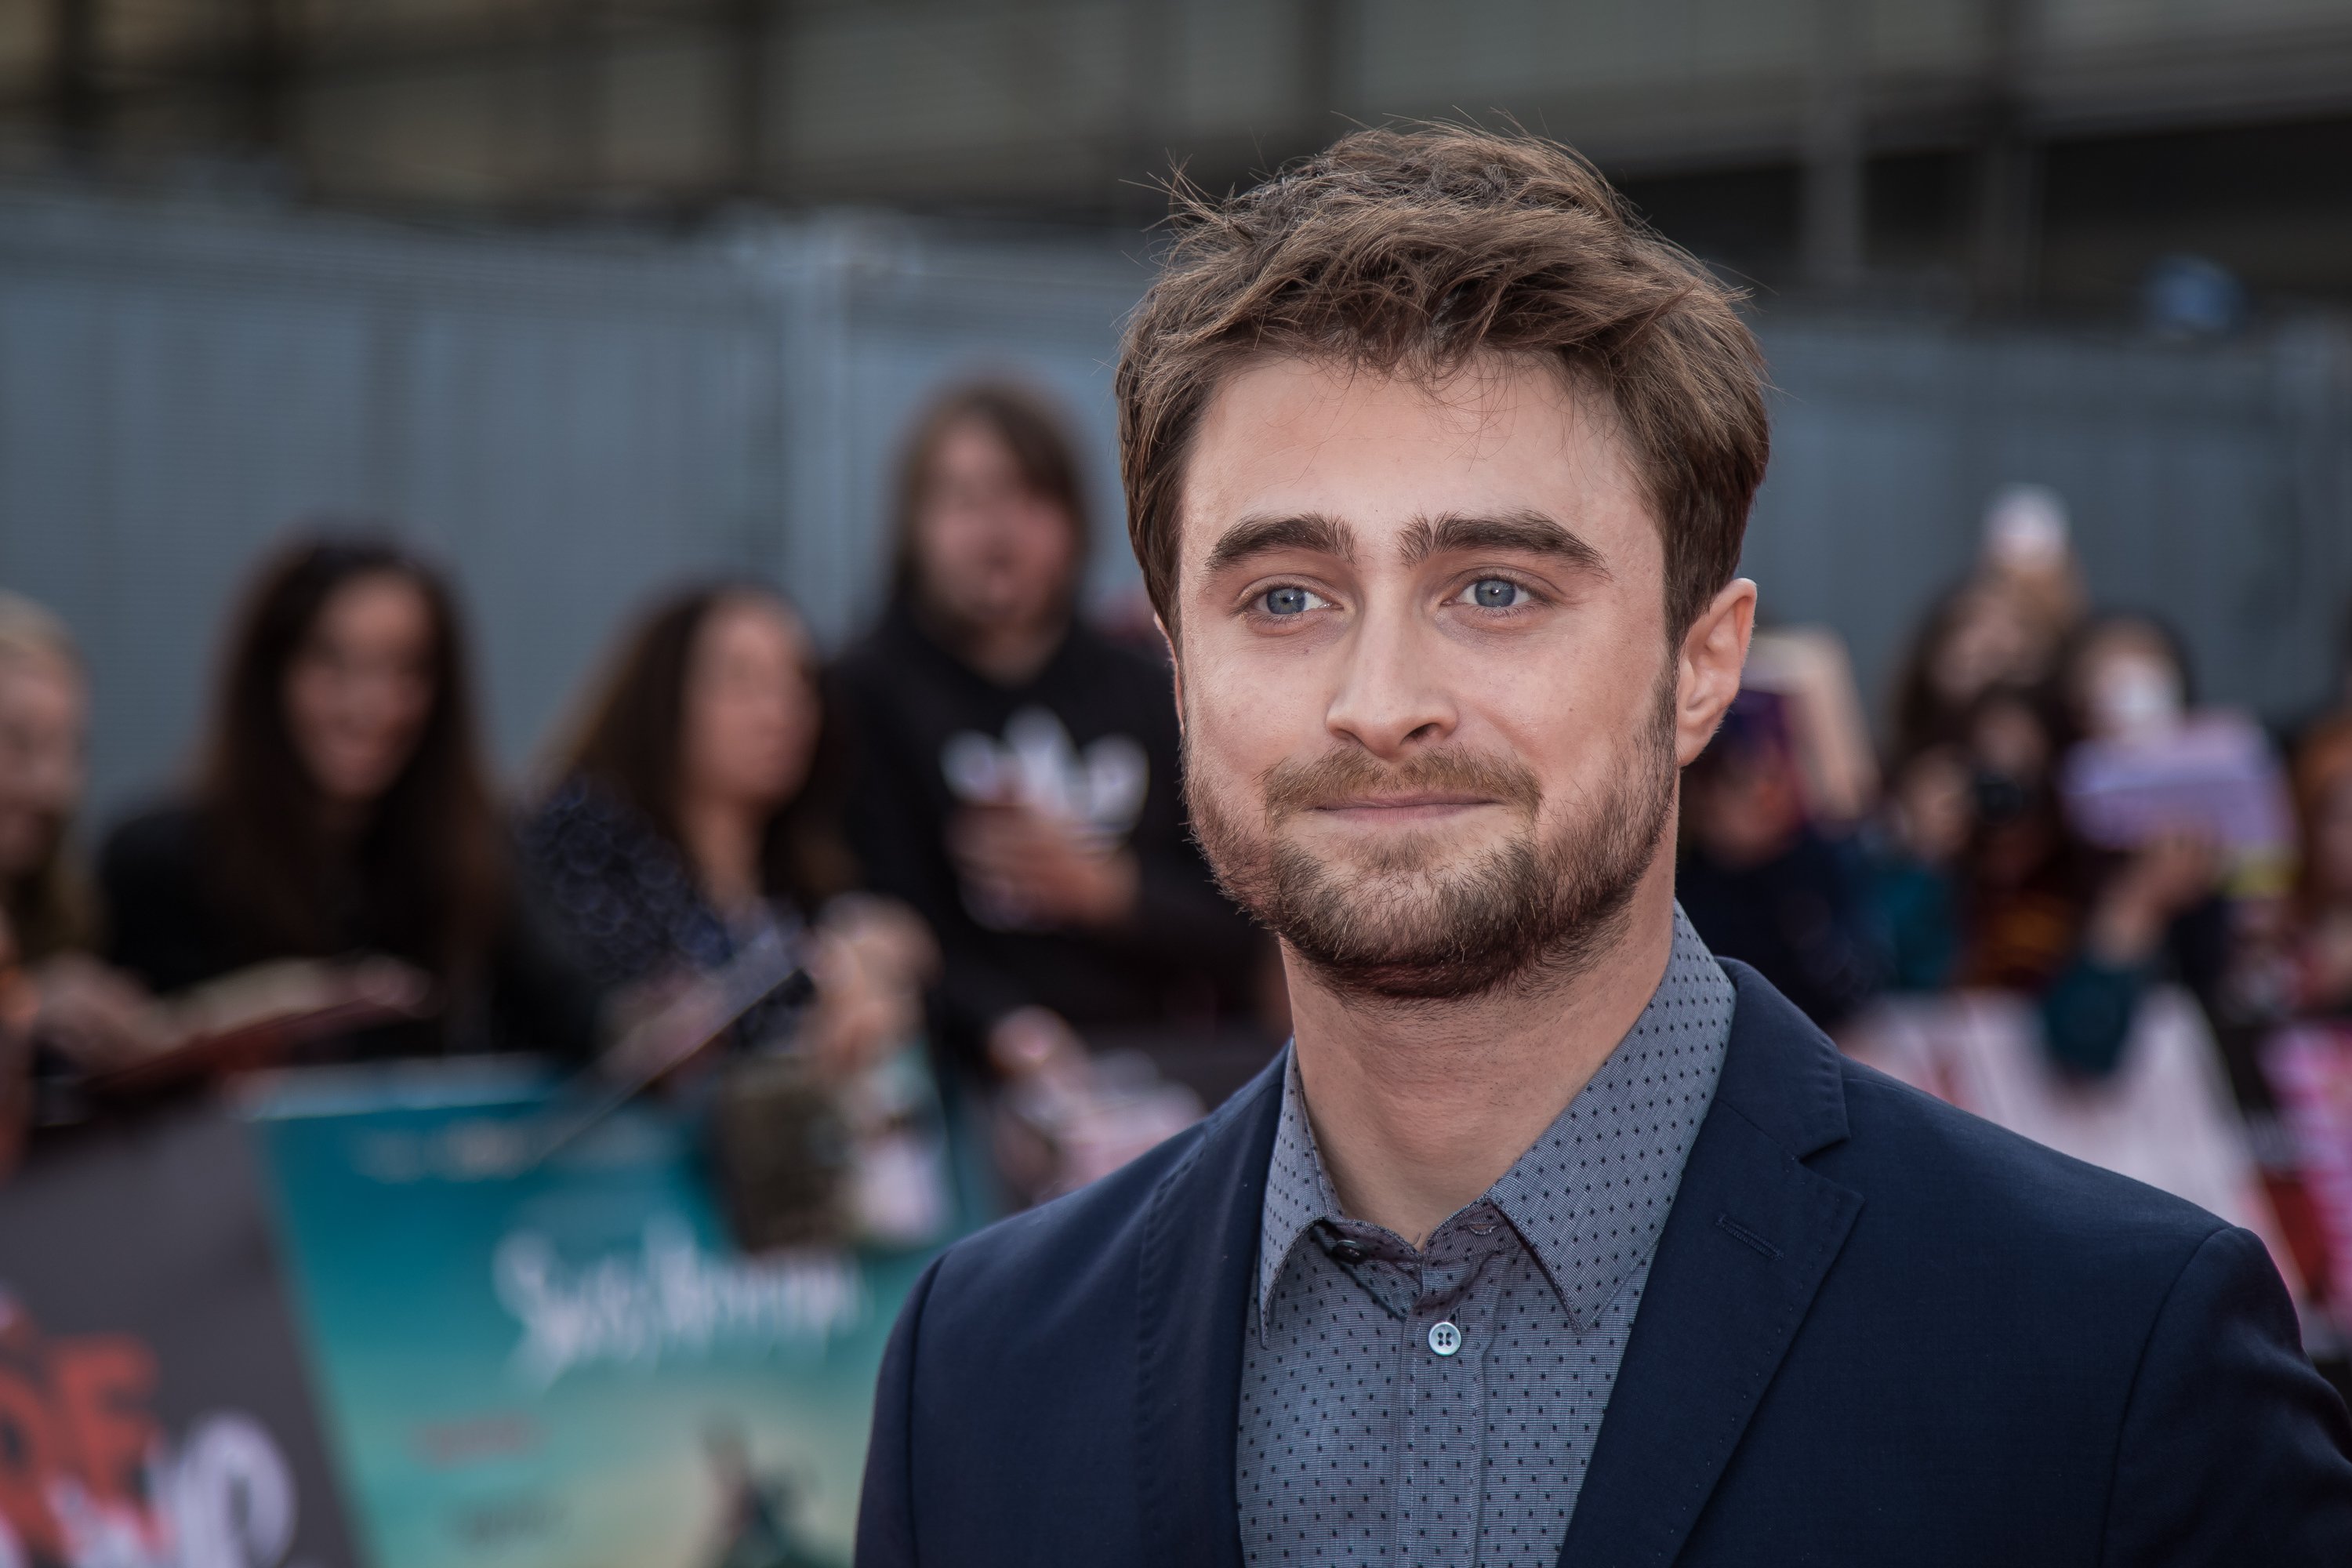 A Daniel Radcliffe no le gustaba hacer de Harry Potter